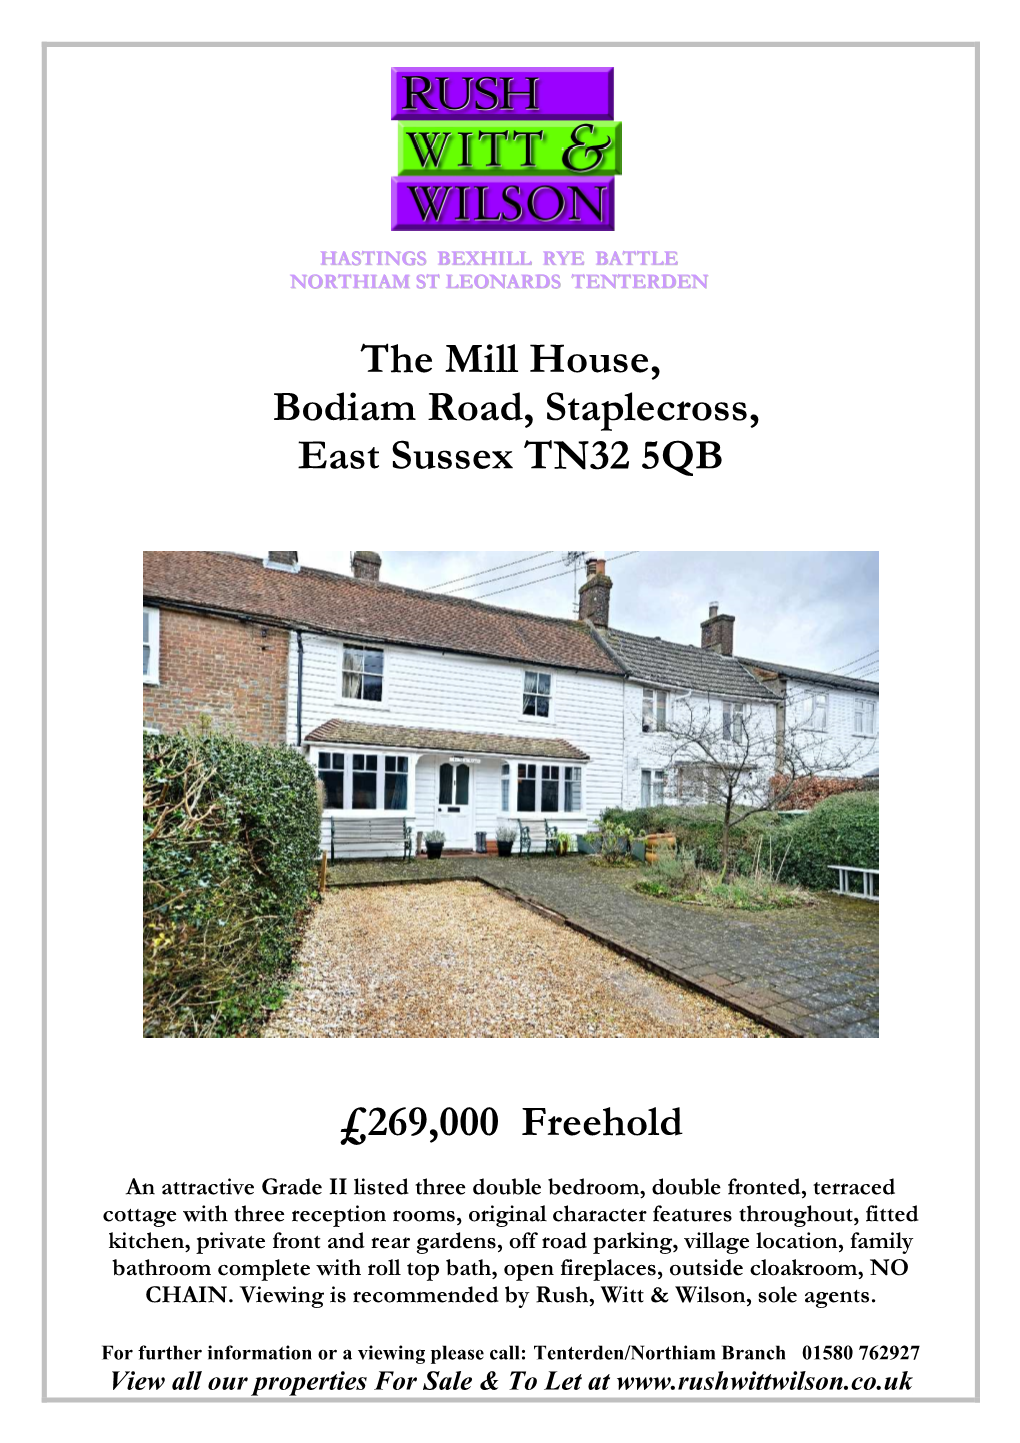 The Mill House, Bodiam Road, Staplecross, East Sussex TN32 5QB